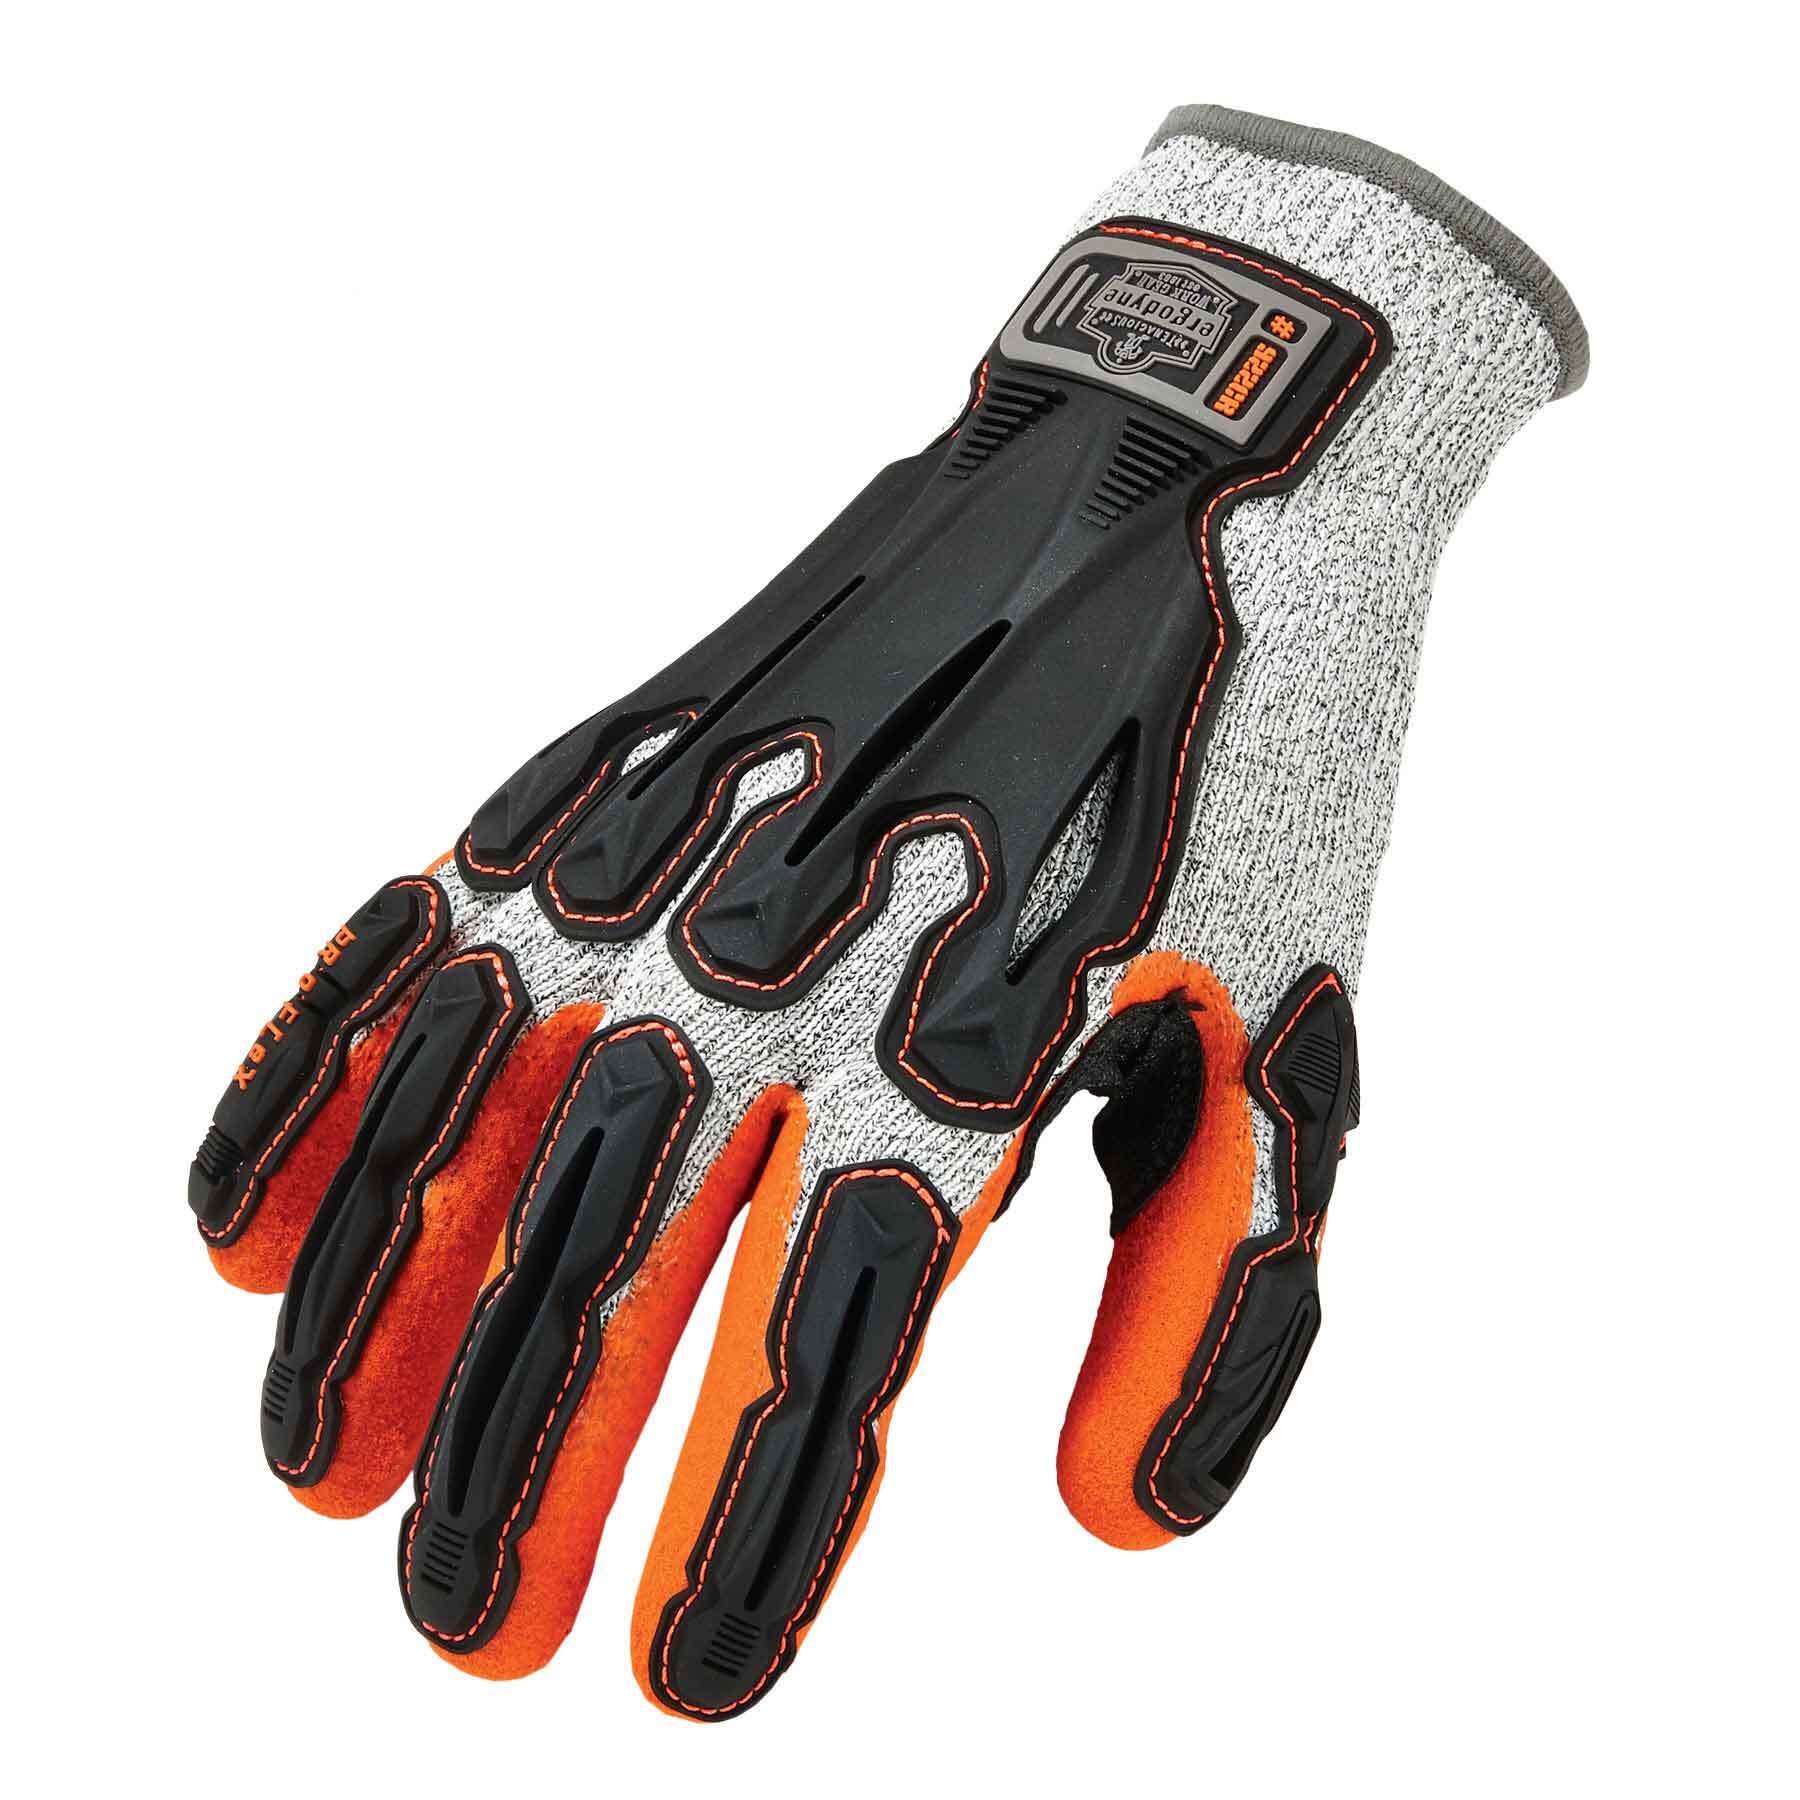 ProFlex® 922CR Nitrile-Coated Cut-Resistant Gloves - ANSI Level A3, DIR  Protection